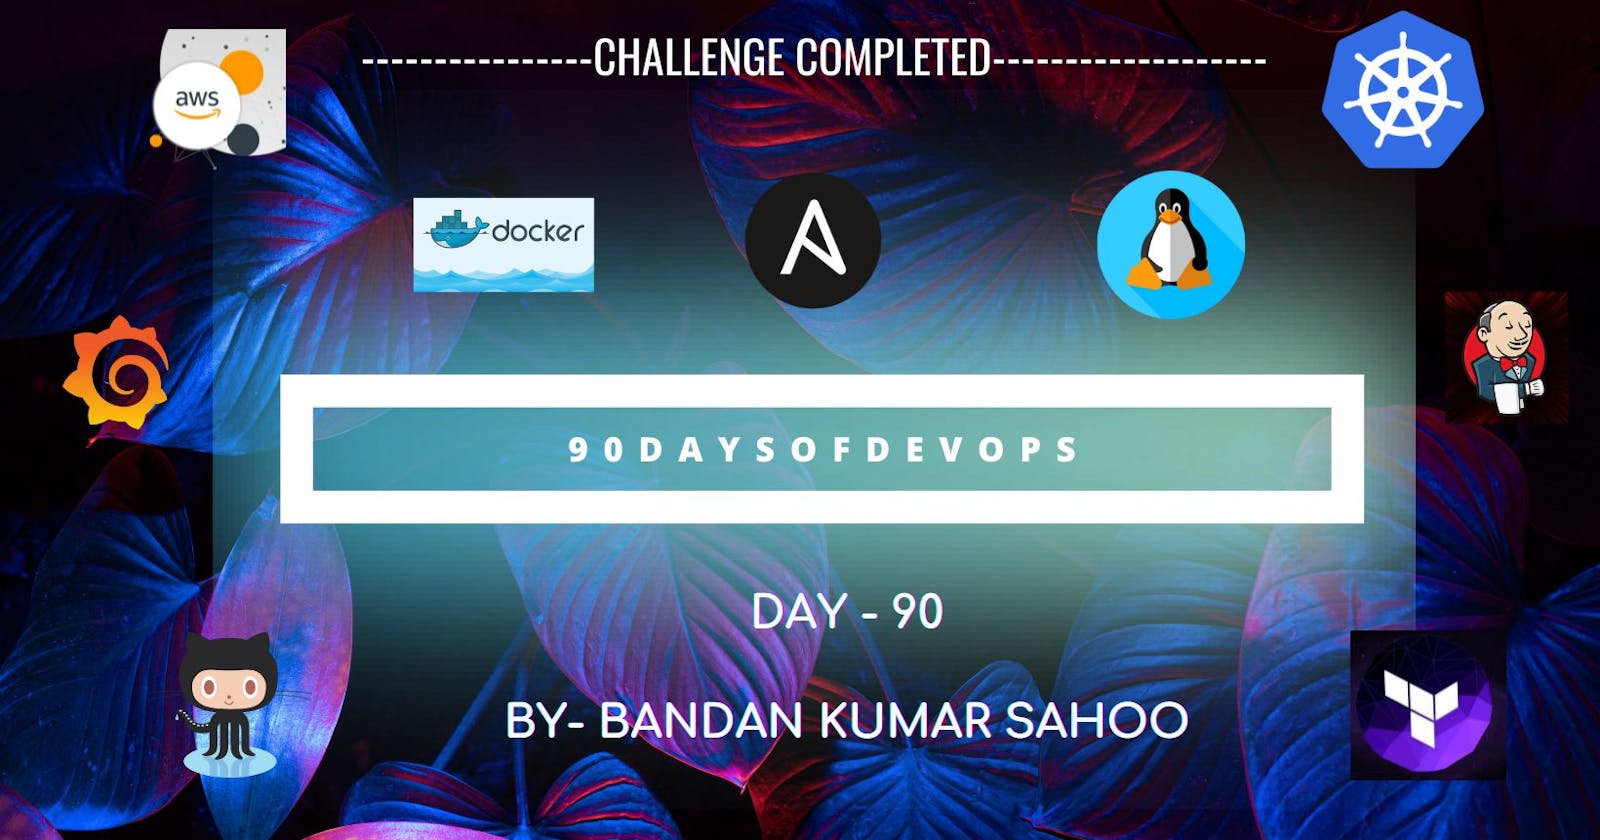 DevOps(Day-90): Ending the Challenge